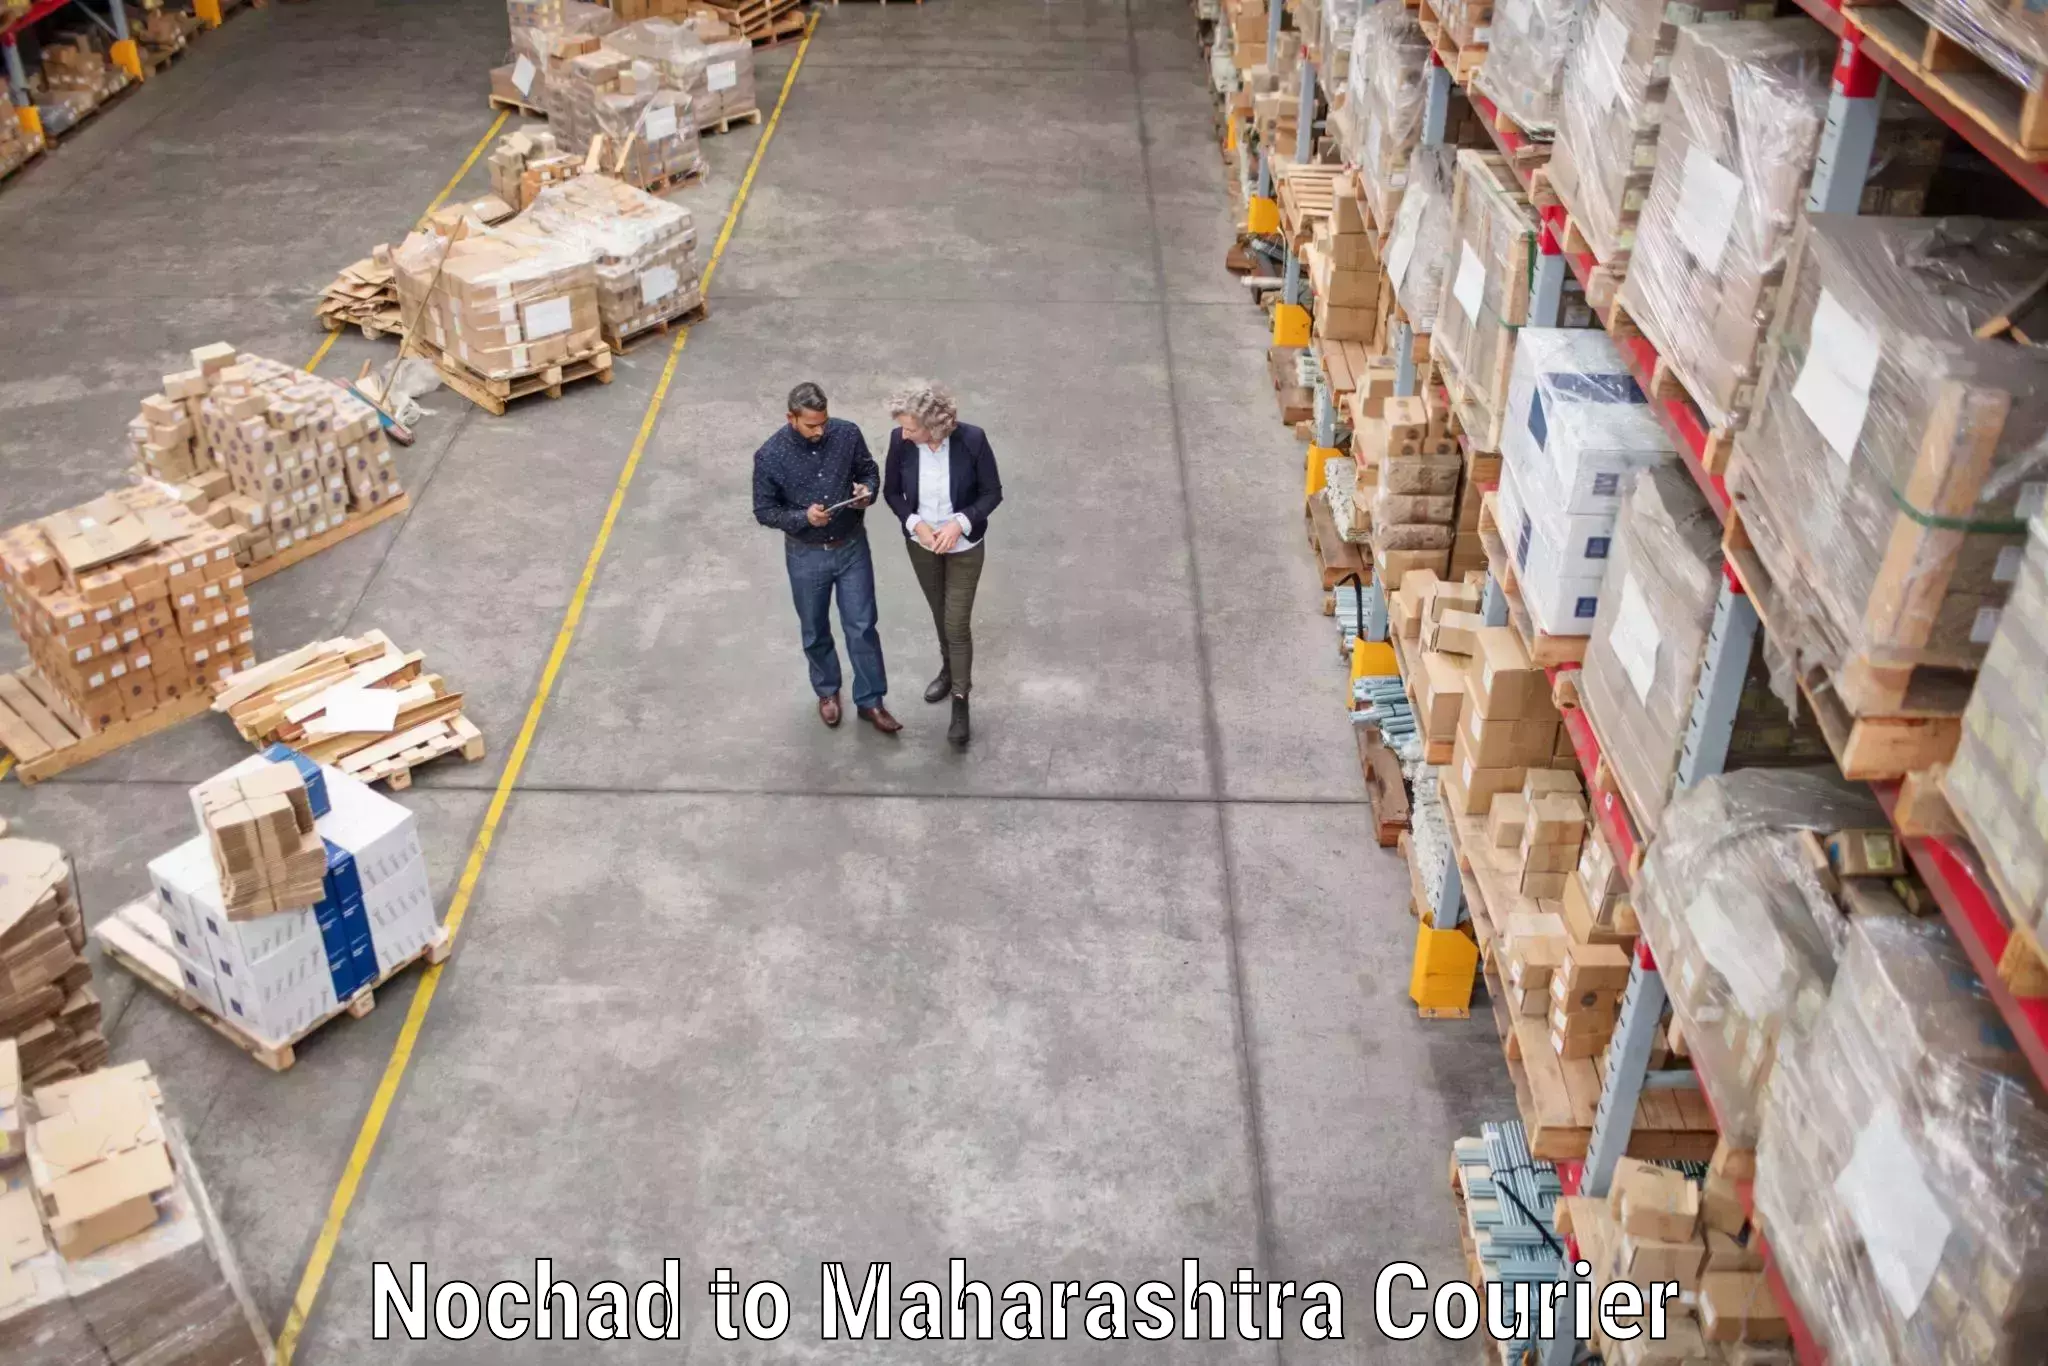 Professional moving company Nochad to Mantha